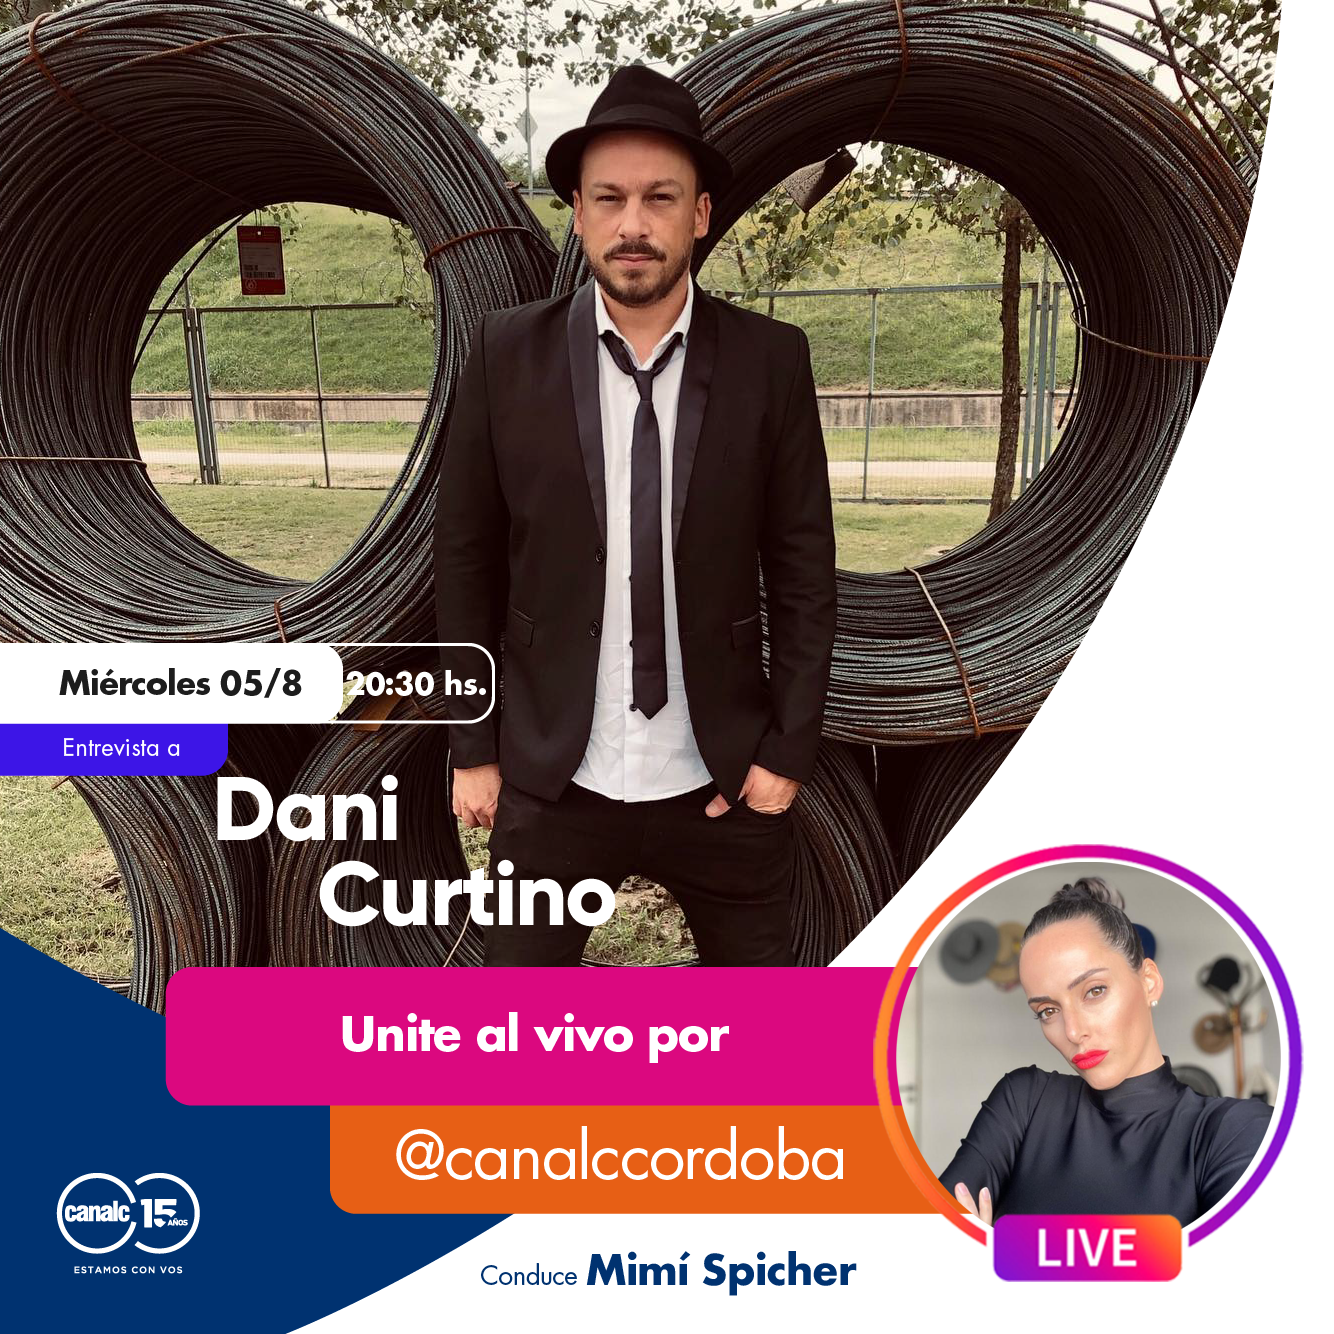 ¡Llega el Instagram Live con Daniel Curtino! • Canal C